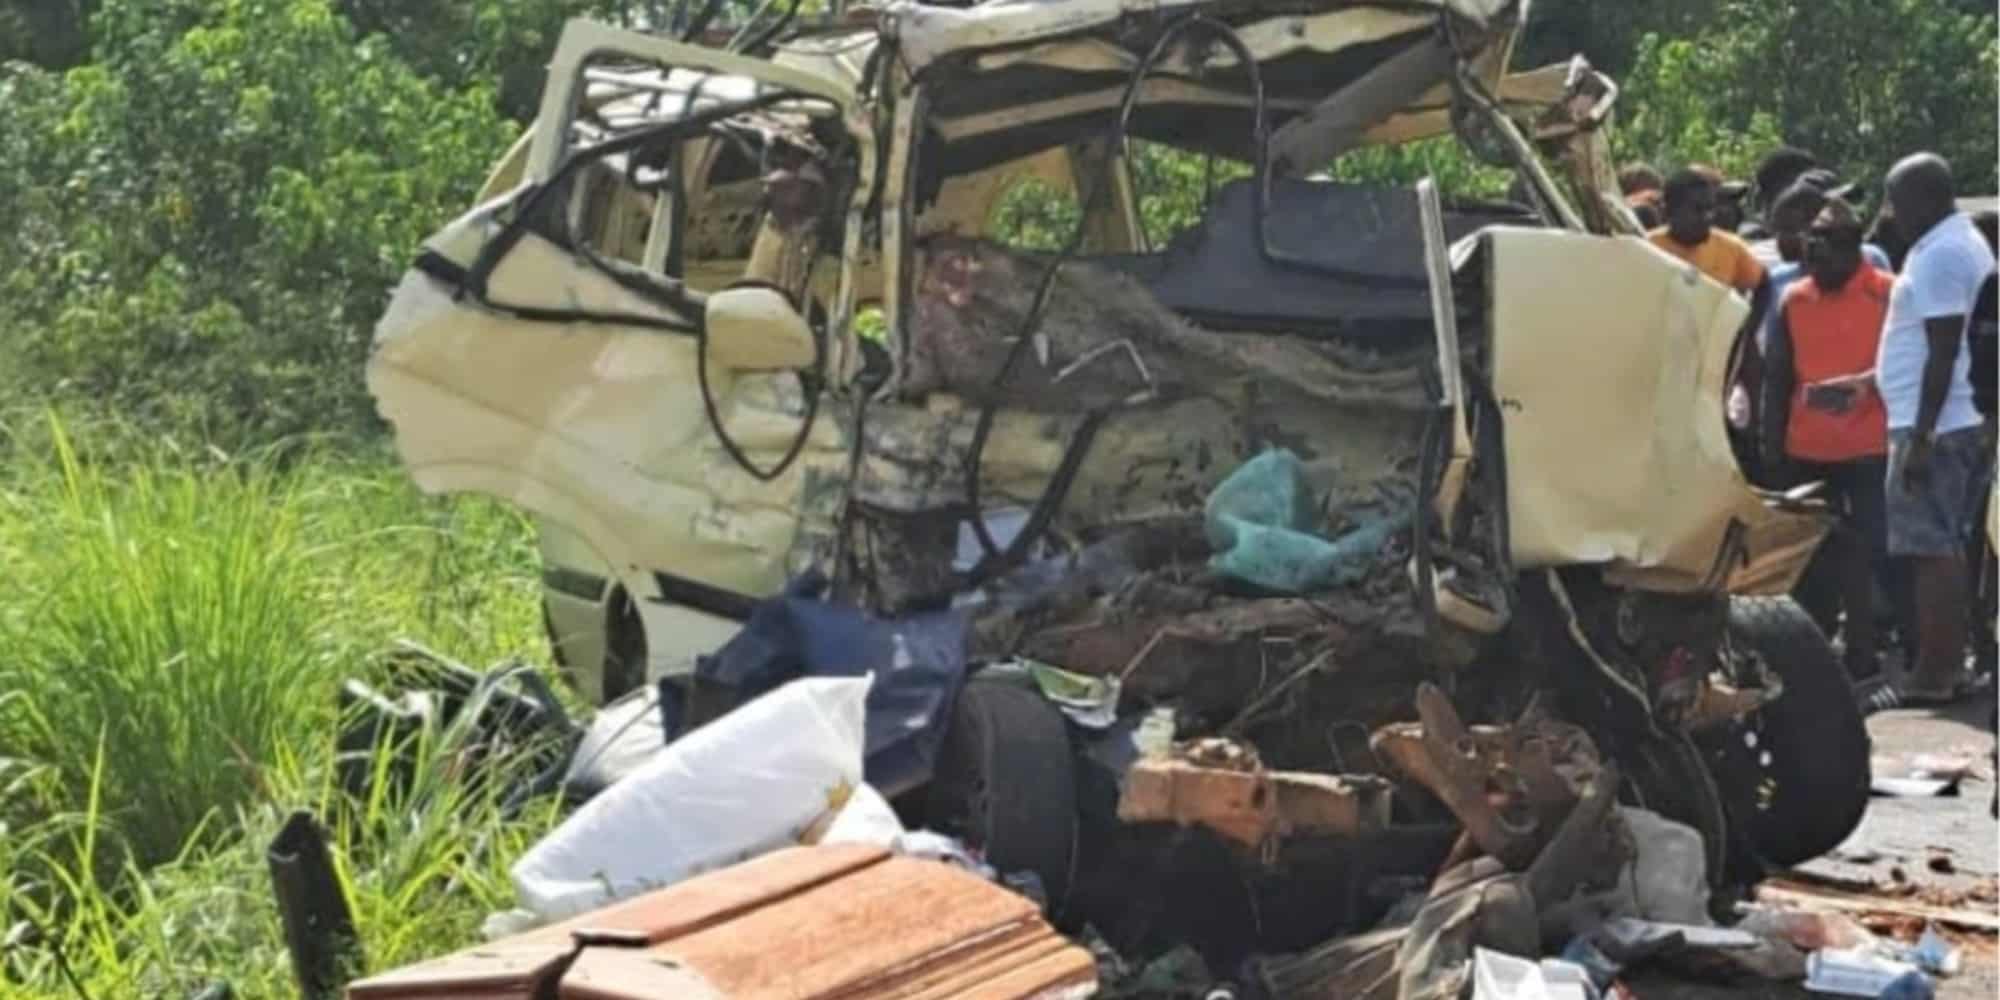 cameroon 27 5 23 - Καμερούν: 16 νεκροί στη μετωπική σύγκρουση μικρού λεωφορείου με φορτηγό